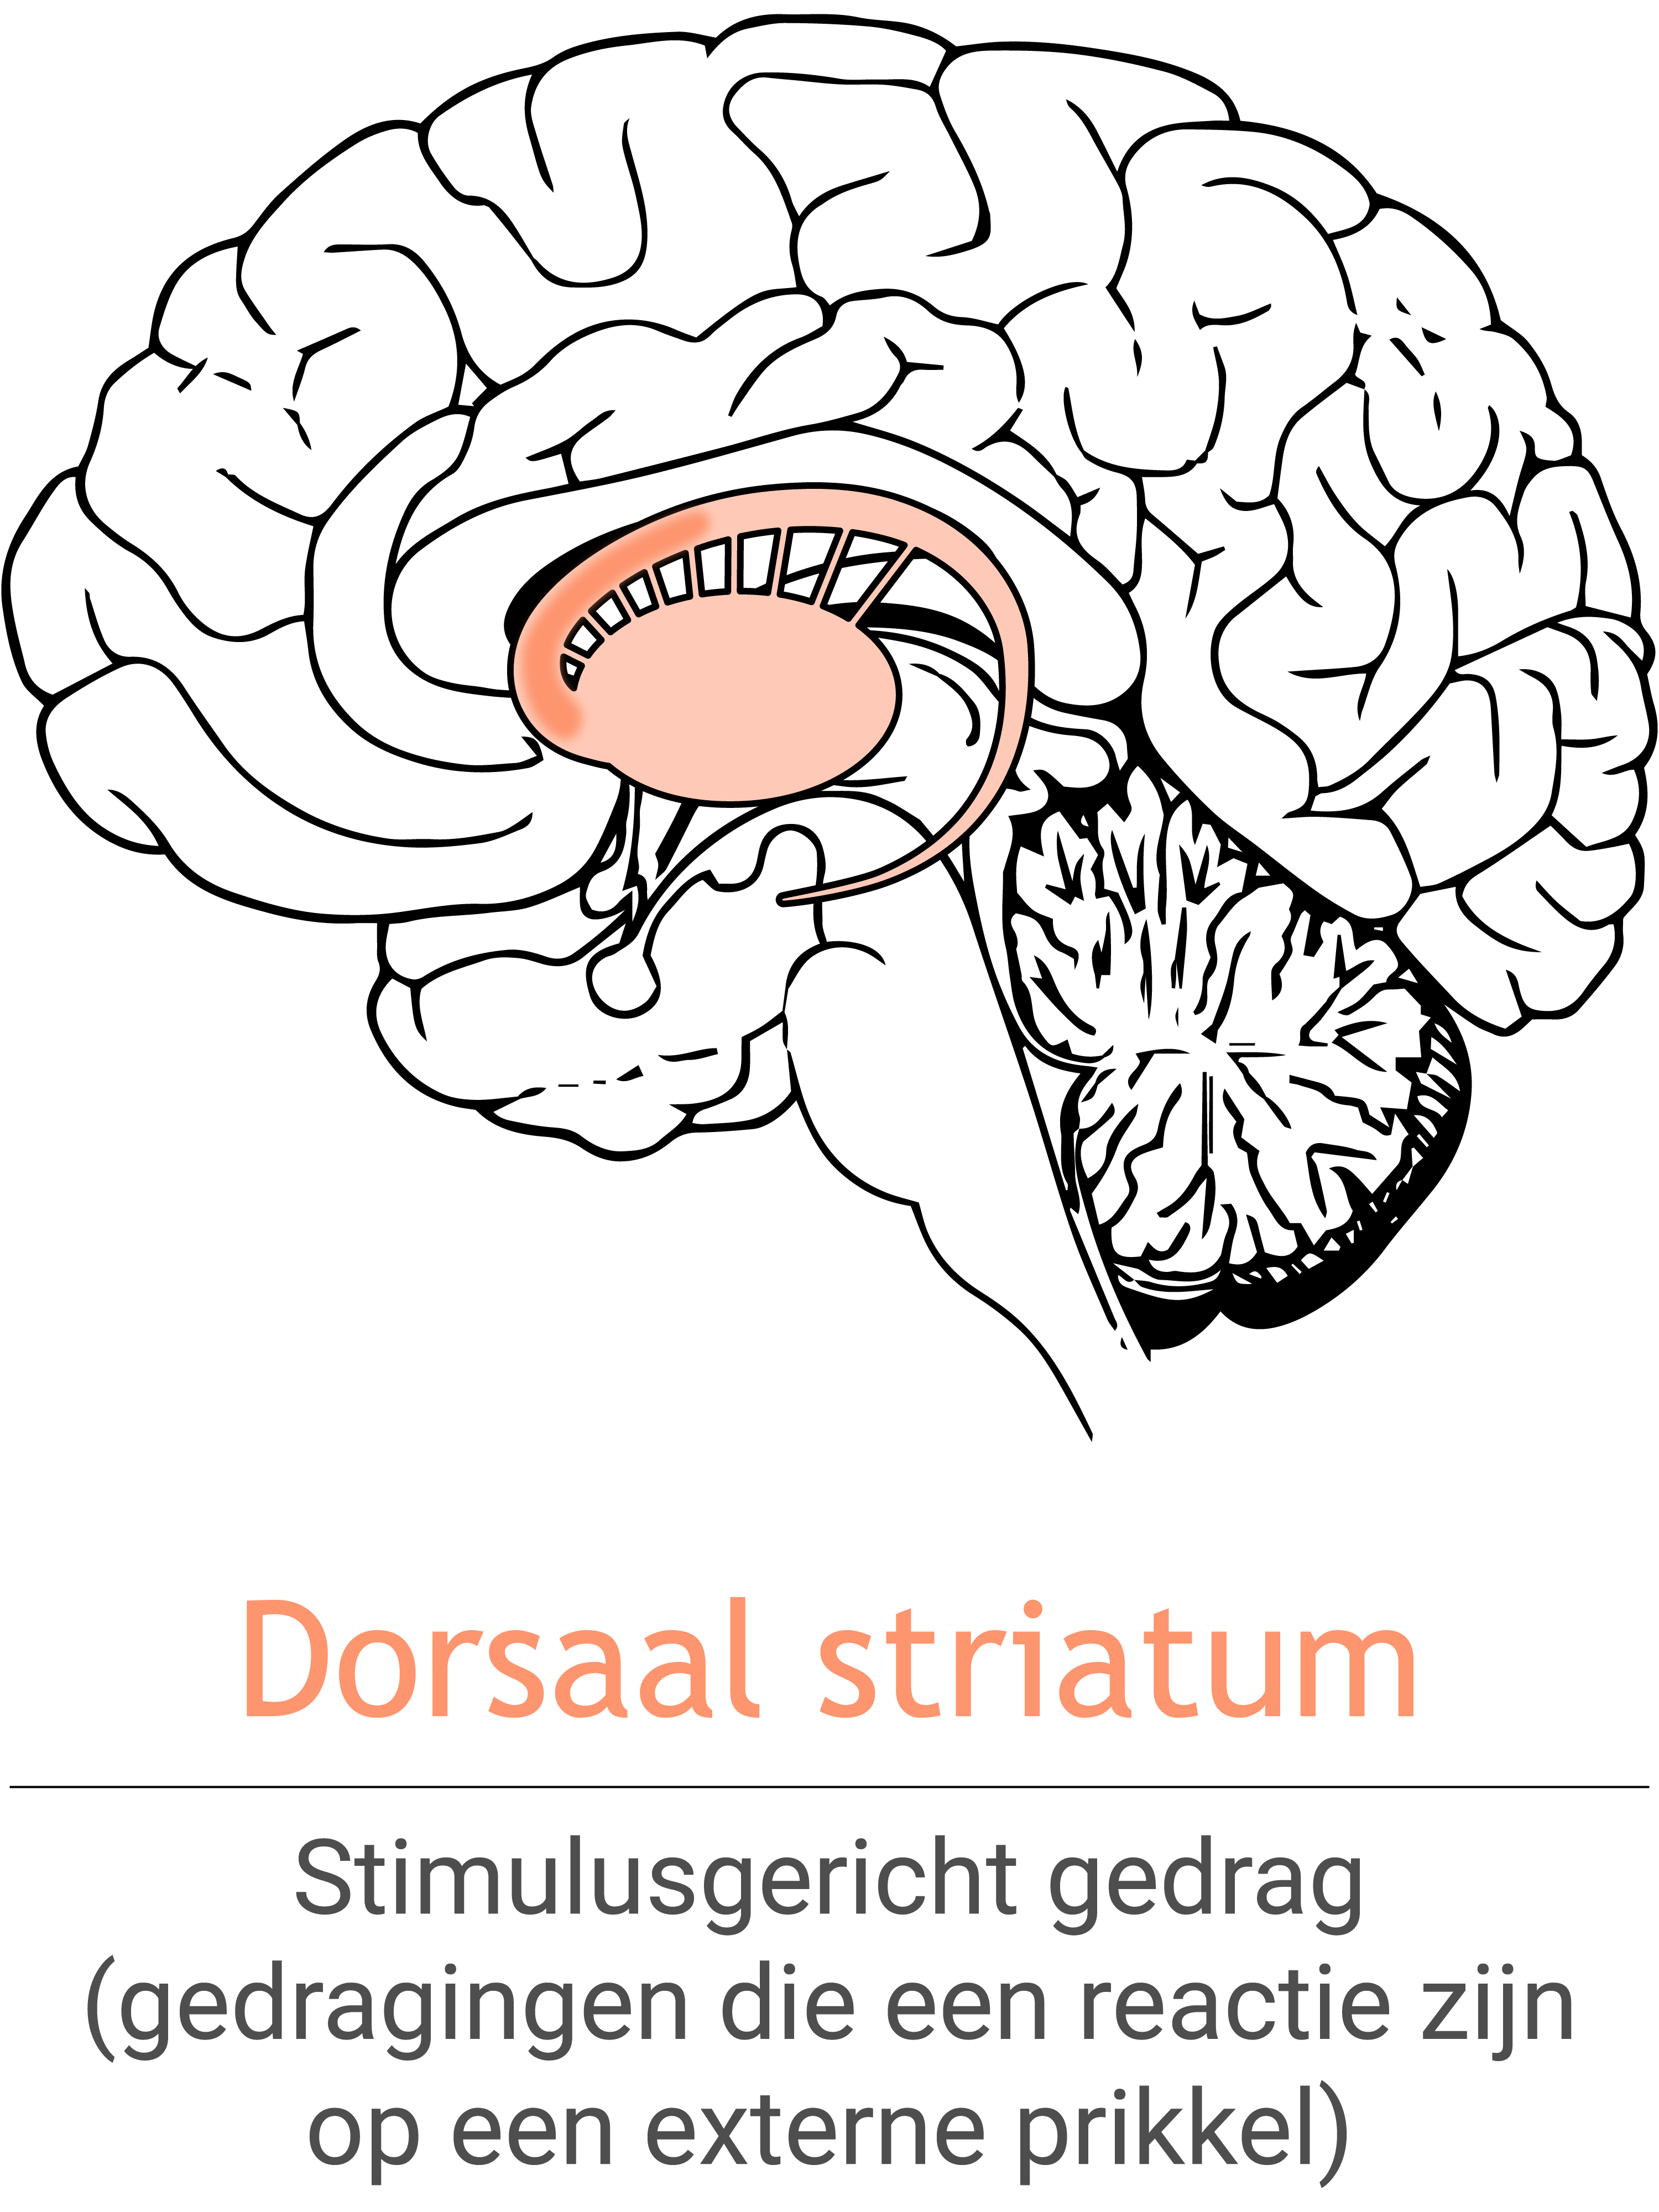 MSH_DorsalStriatum_NL